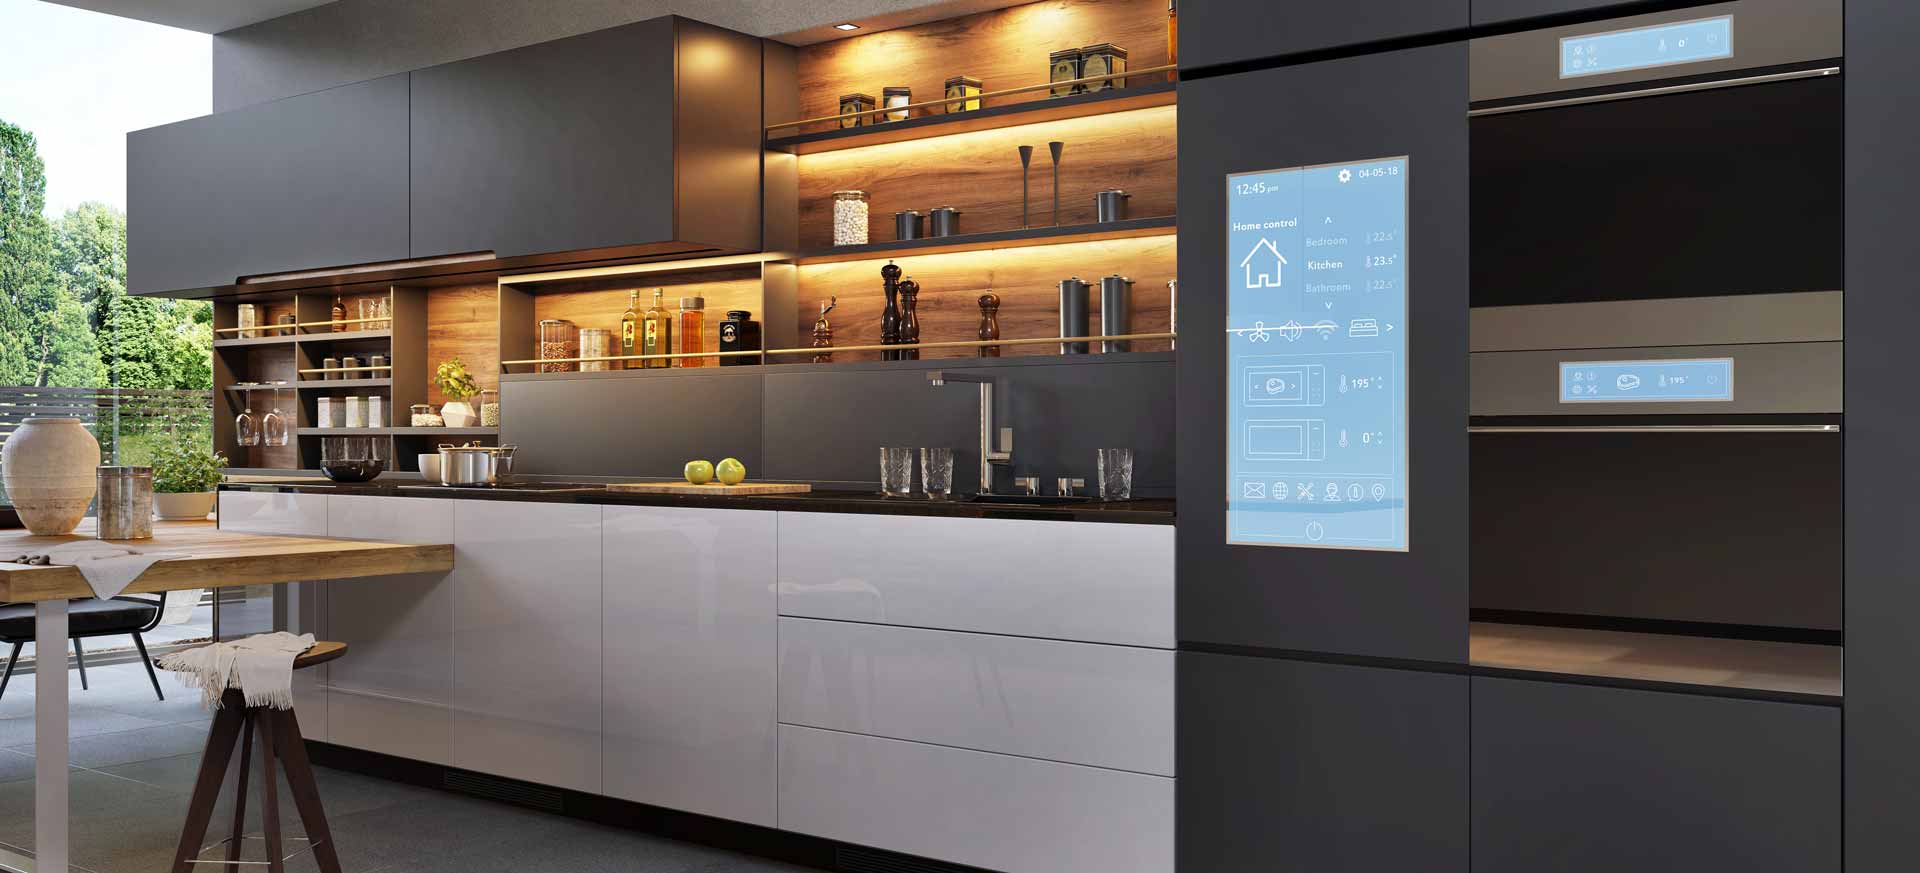 Futuristic kitchen with smart appliances